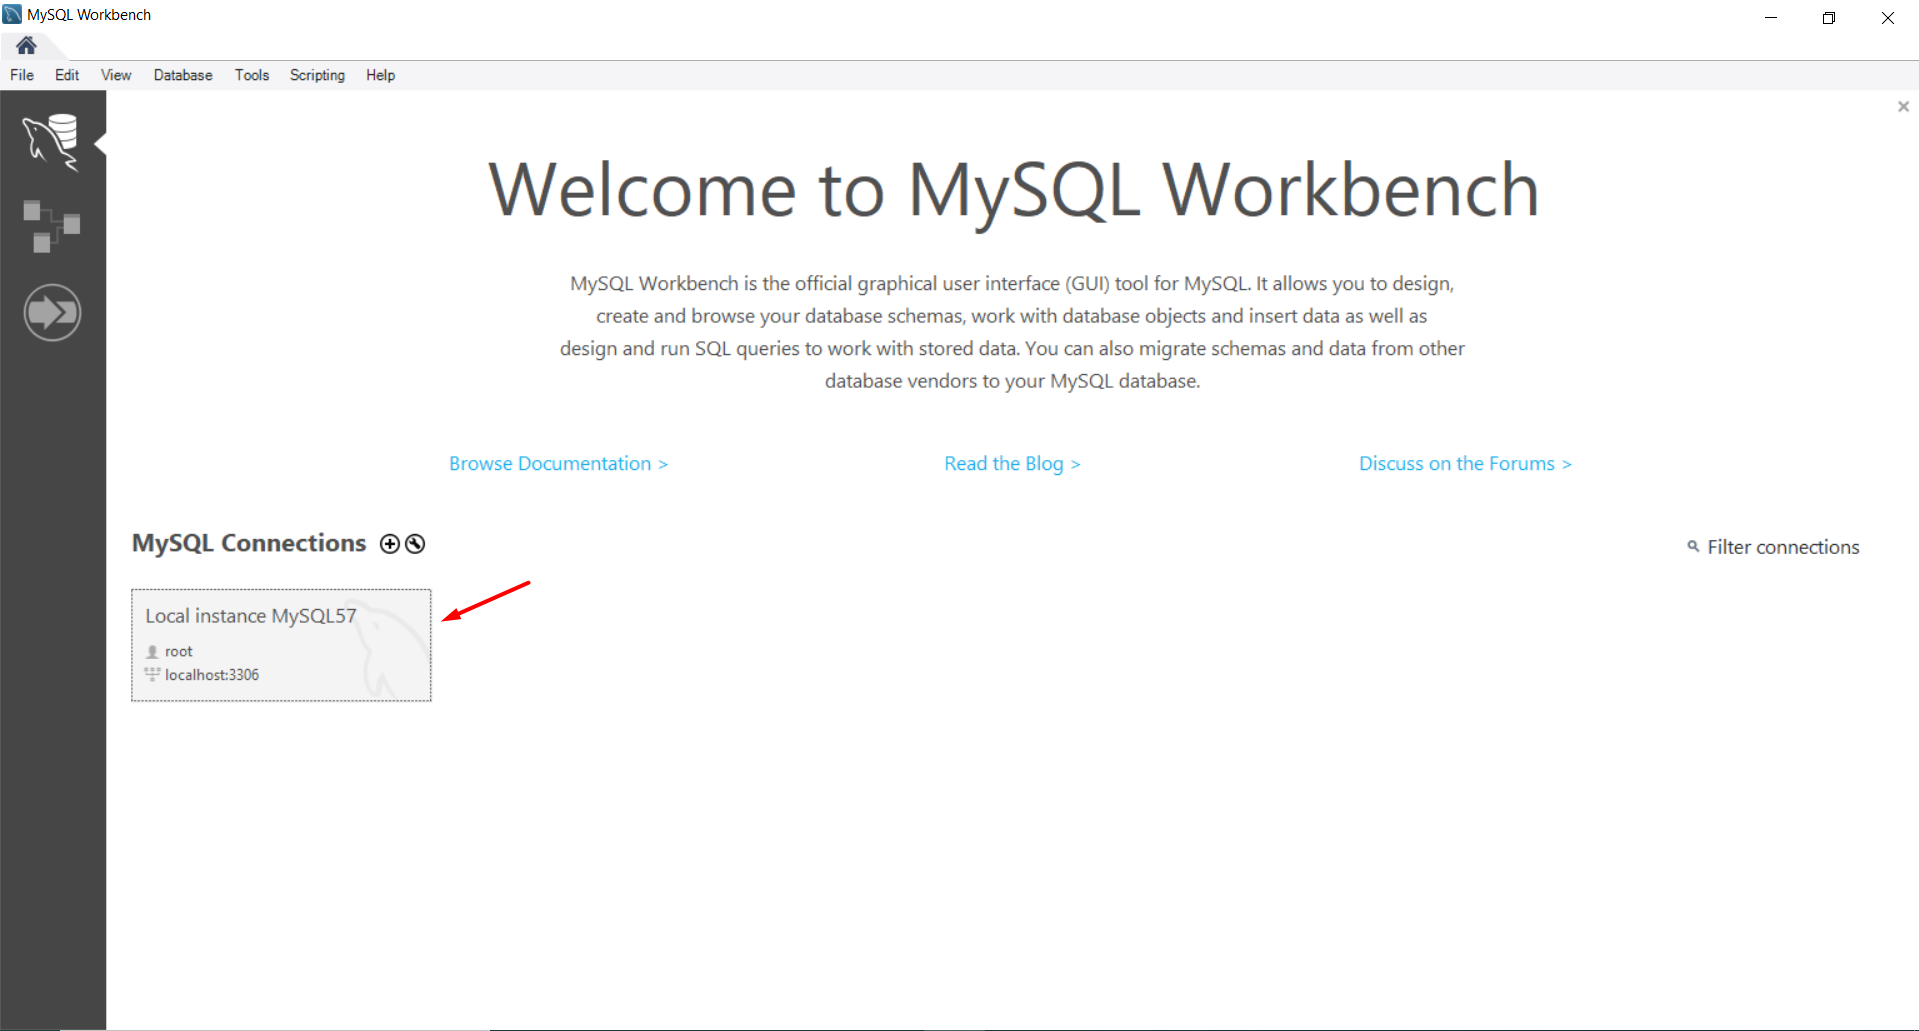 MySQL Workbench home page